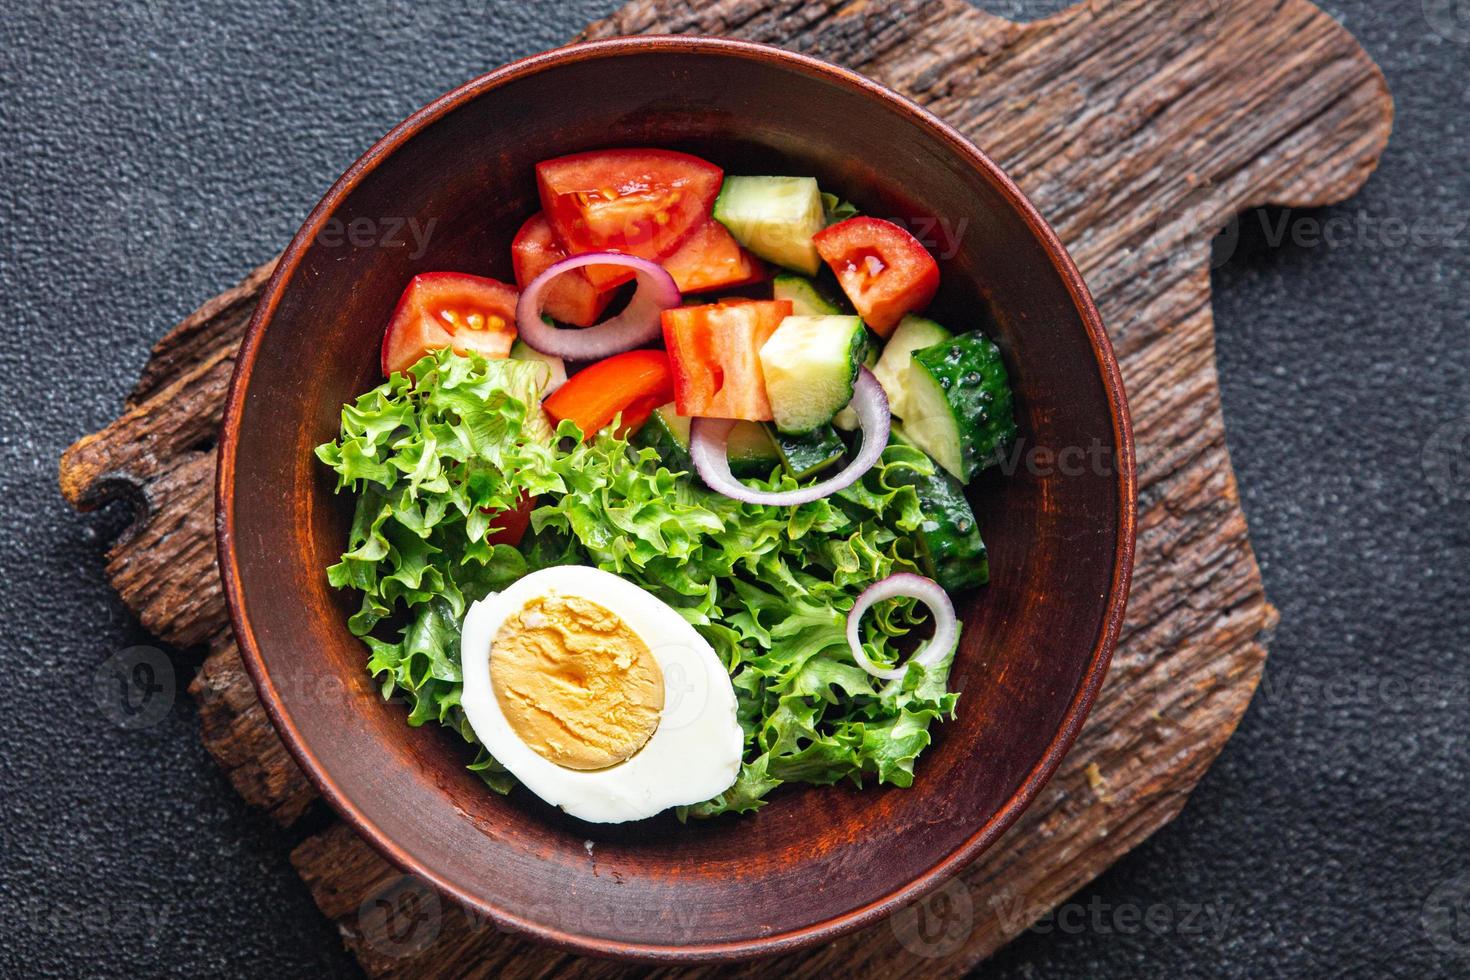 ensalada de verduras huevo cocido pepino, tomate, cebolla, lechuga dieta  keto o paleo saludable 4816118 Foto de stock en Vecteezy